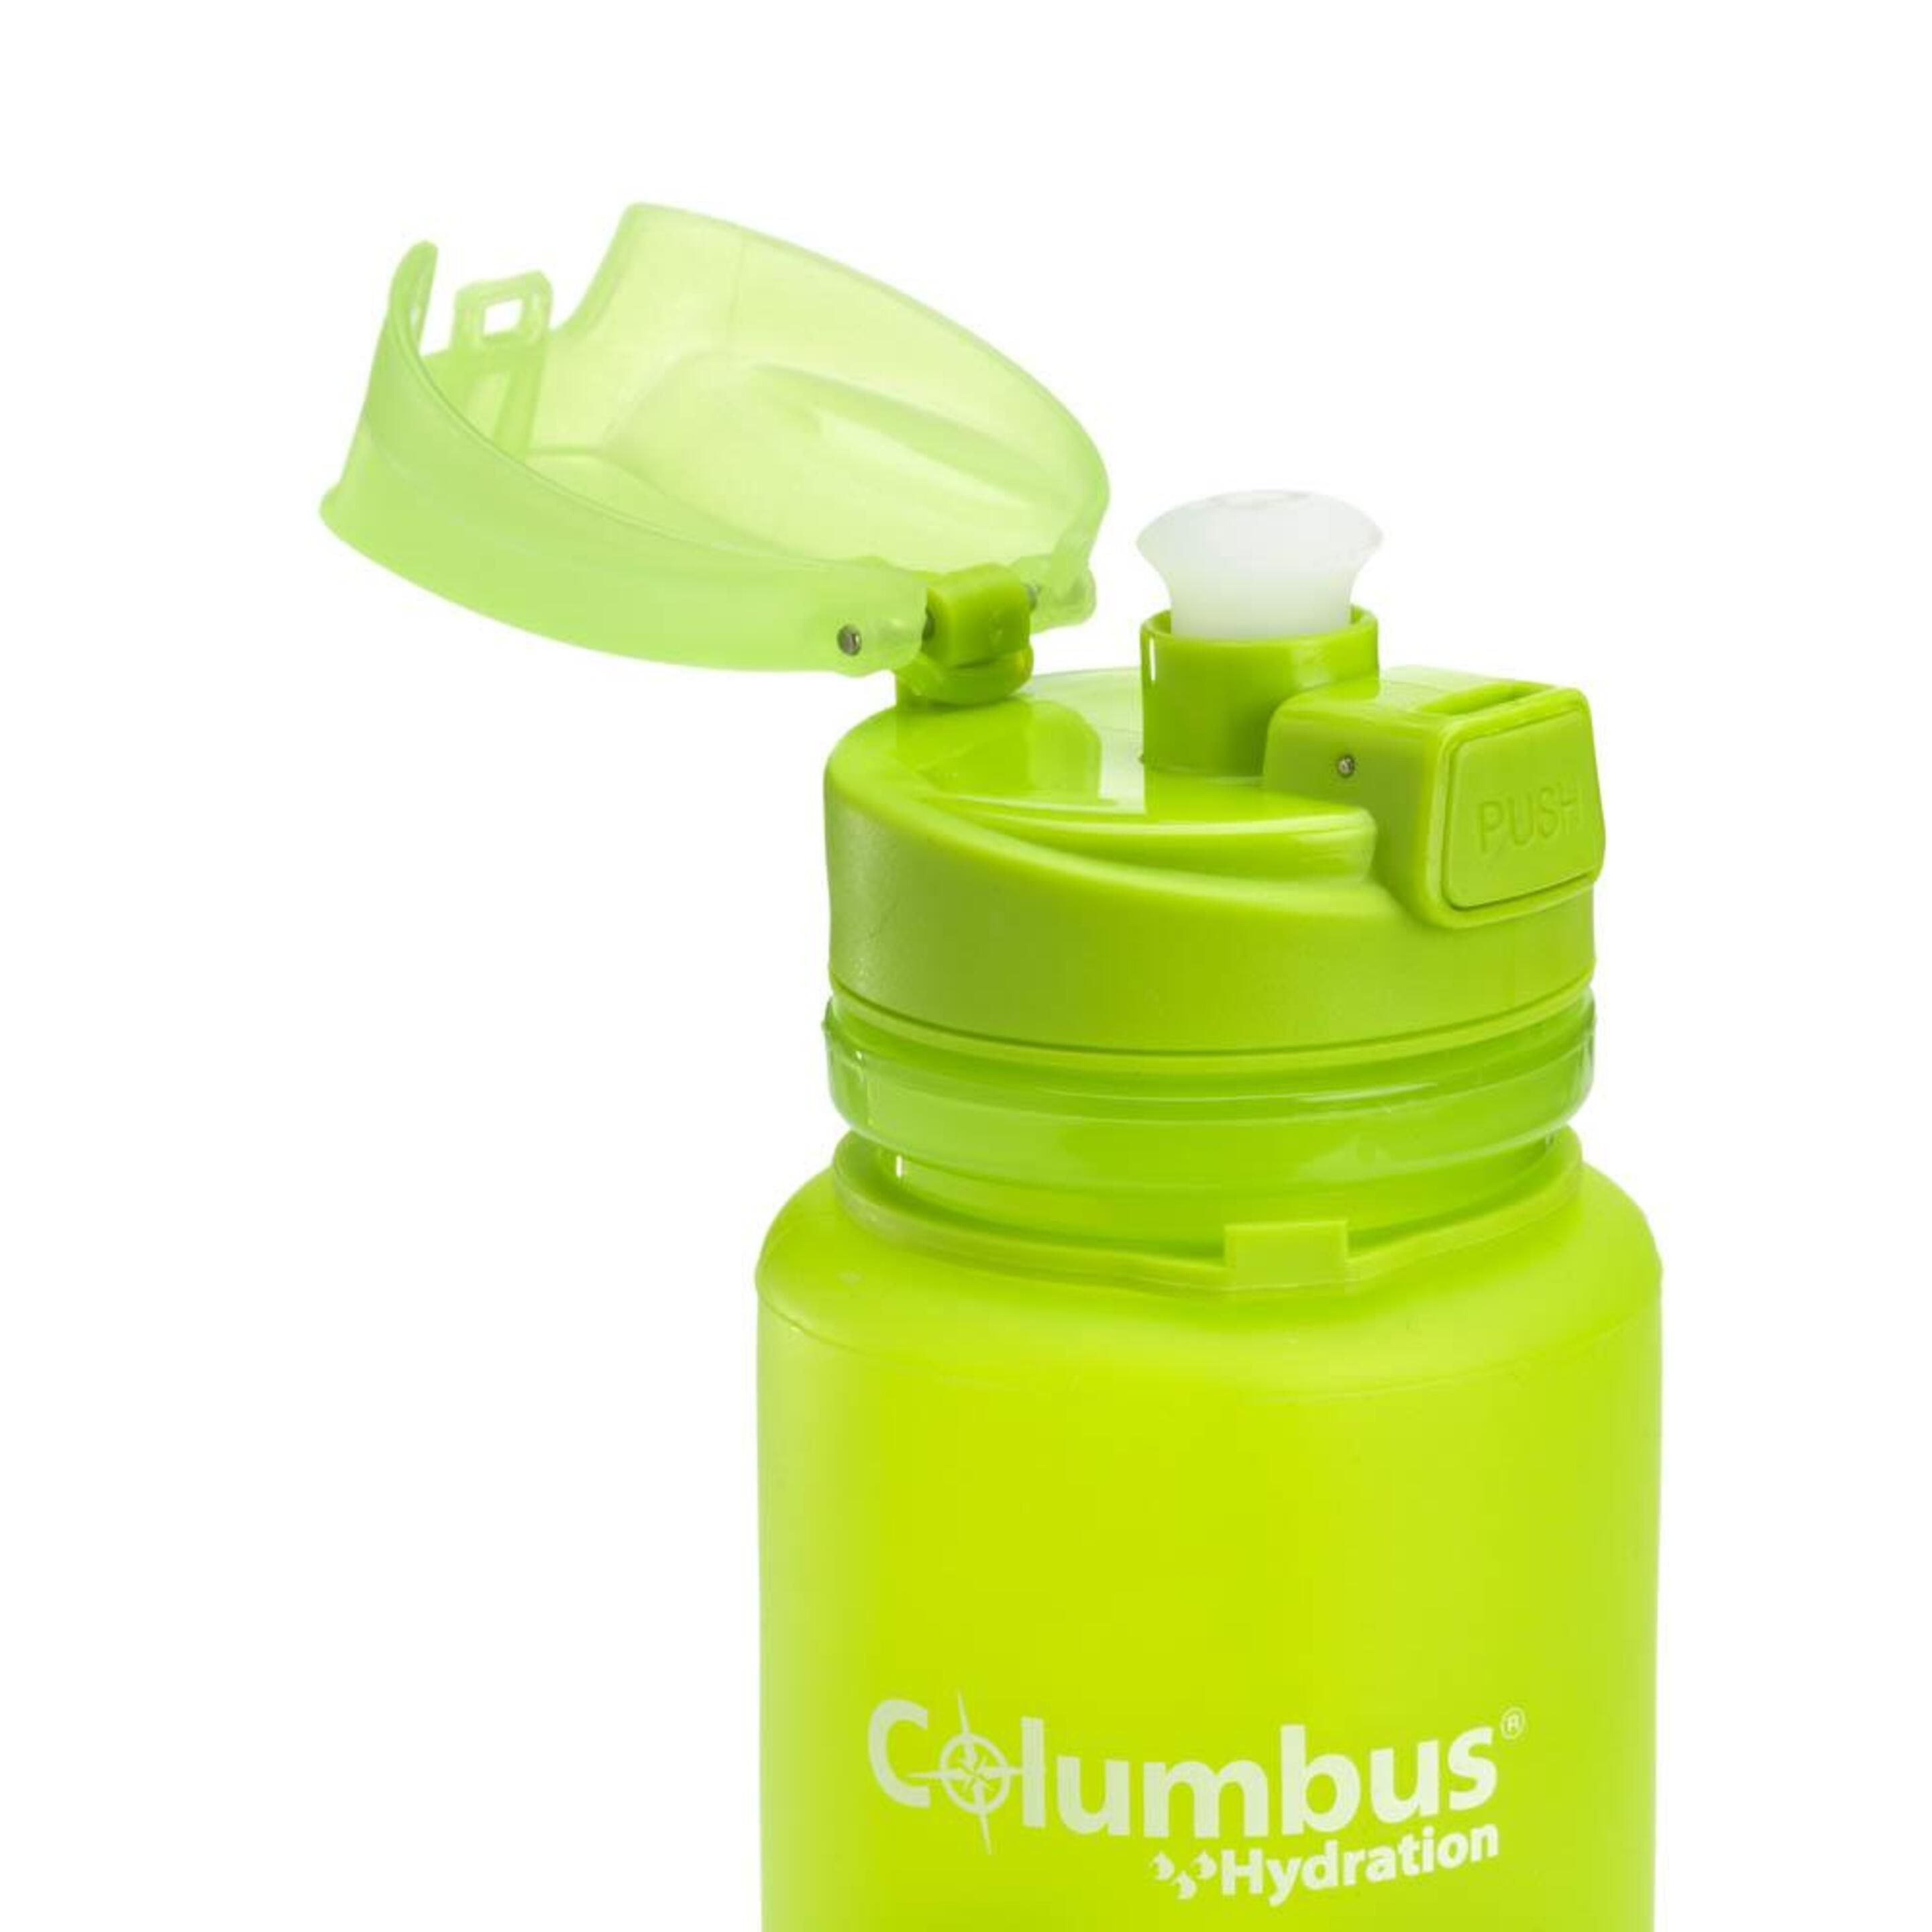 Botella De Silicona Columbus  Aqua 650 Green - verde  MKP